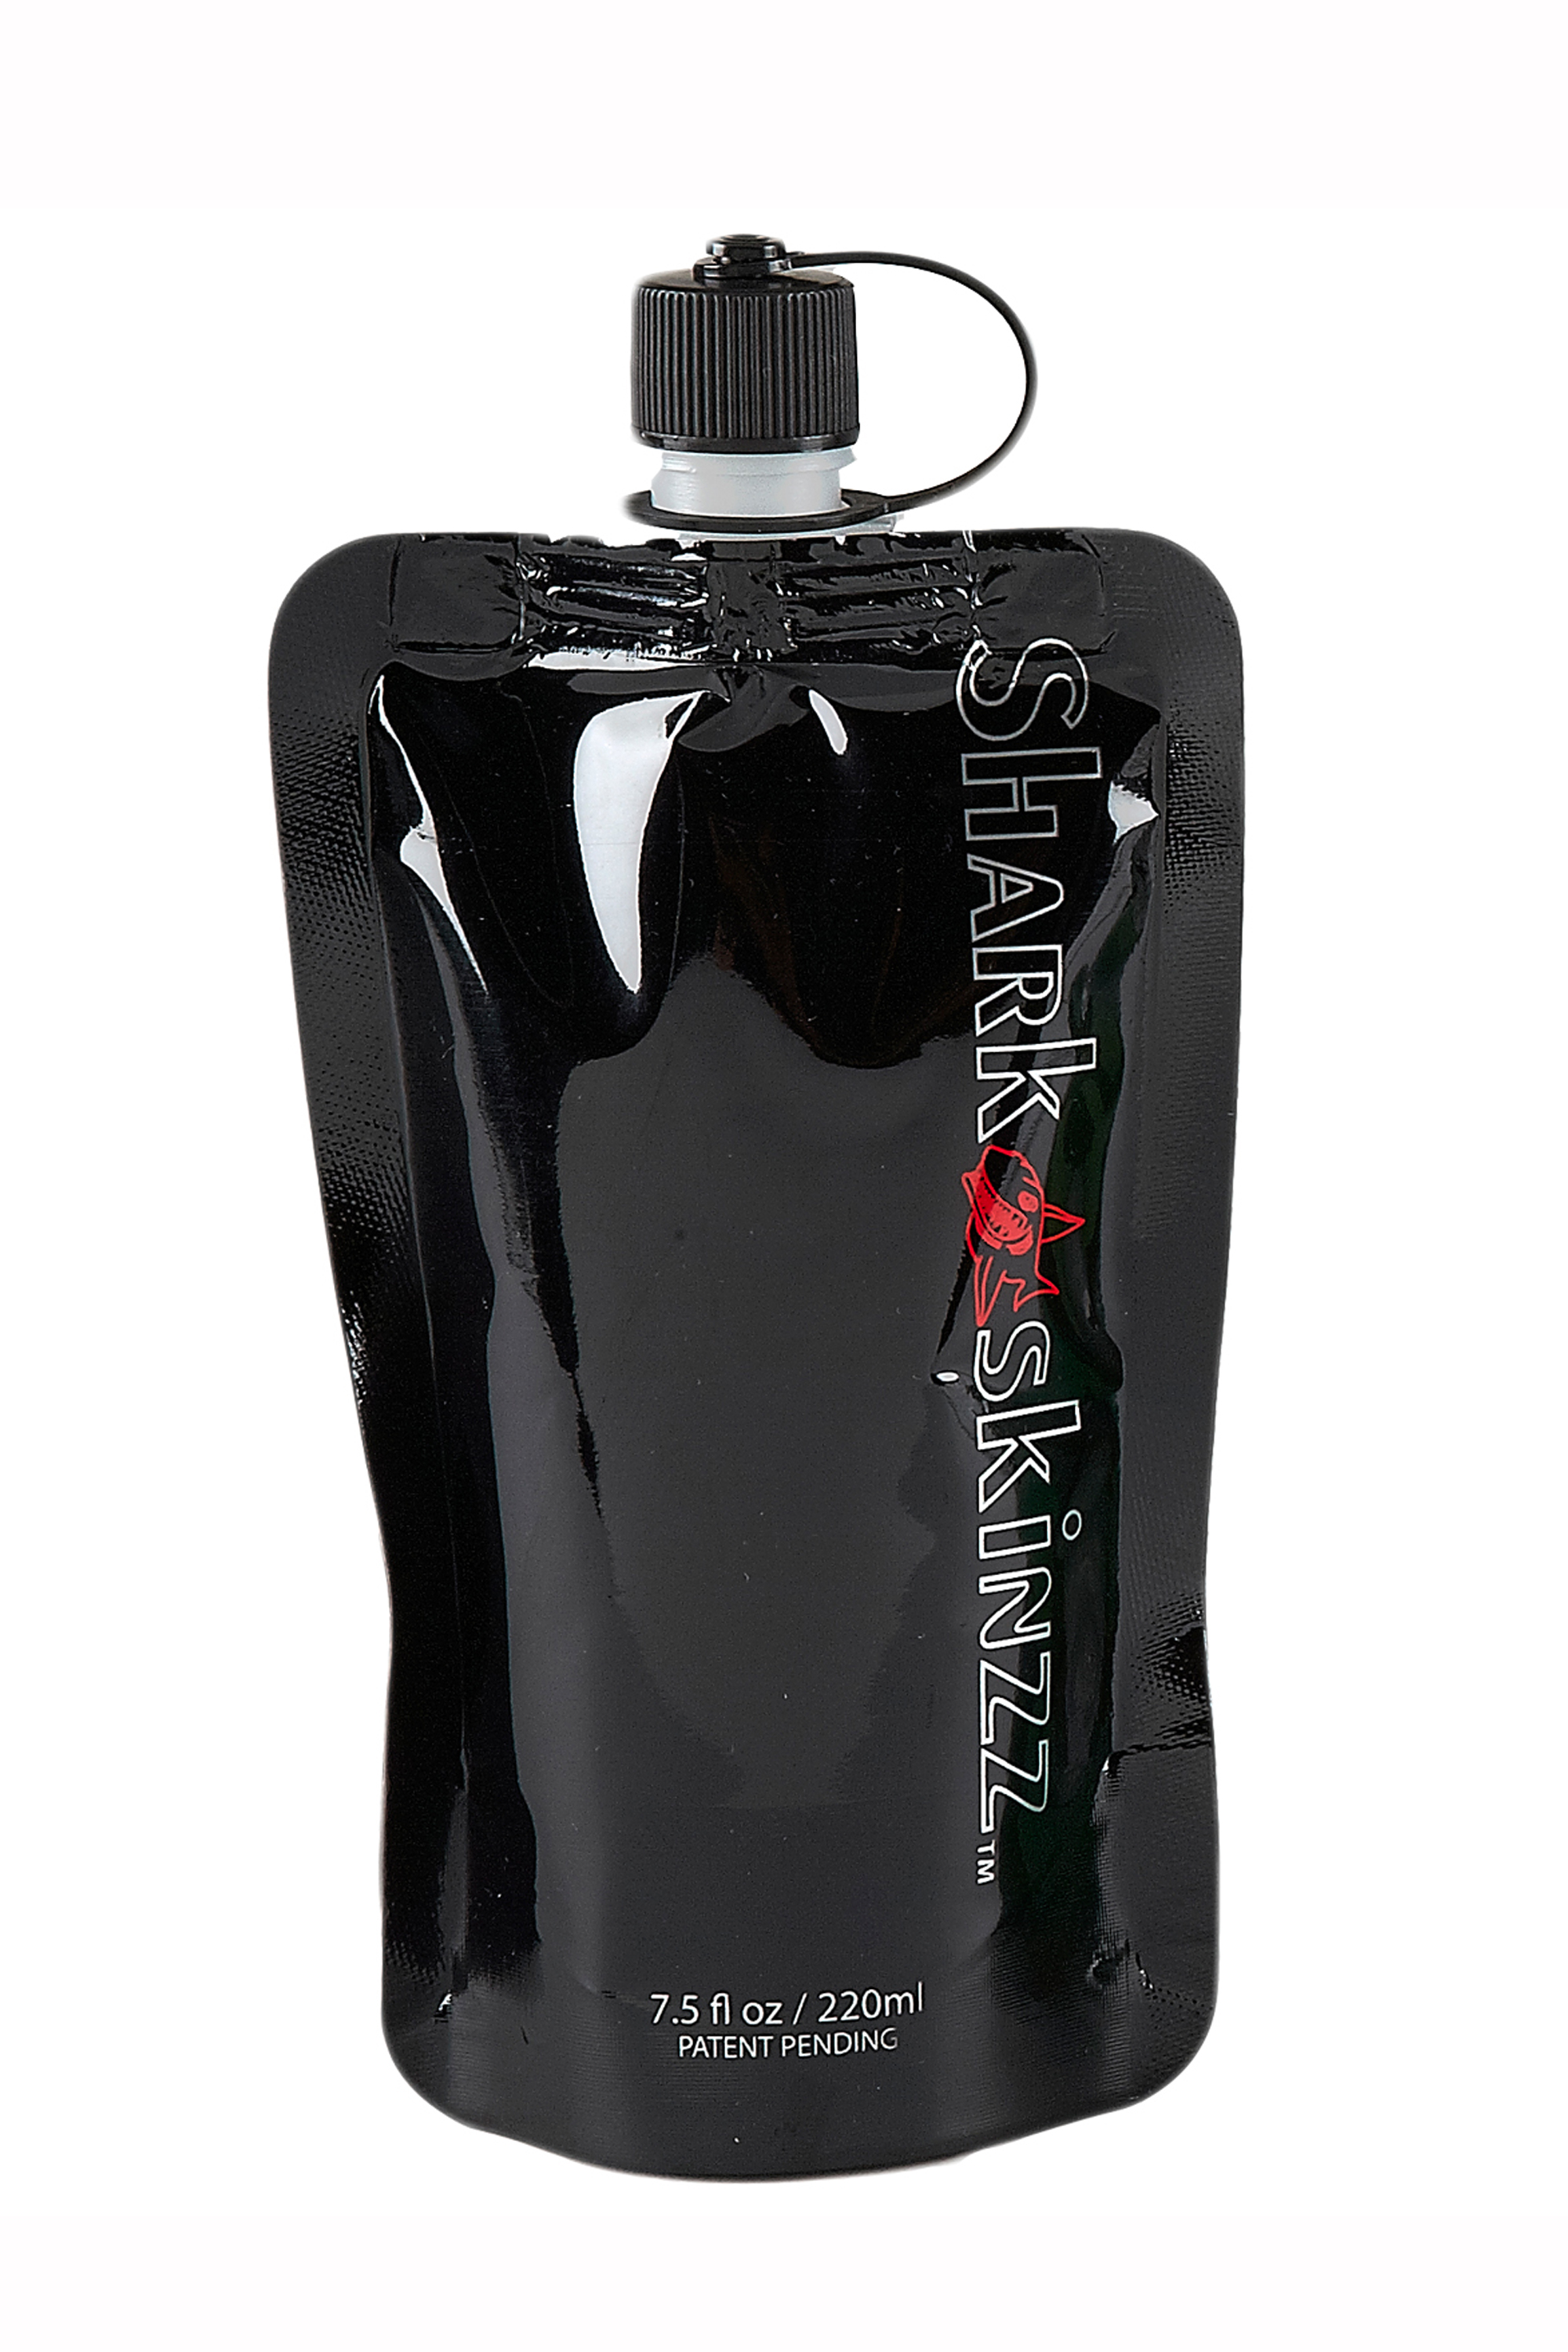 Shark Skinzz The Original Disposable Flask Silver Reusable 3 Pack 7.5  oz/220 ml